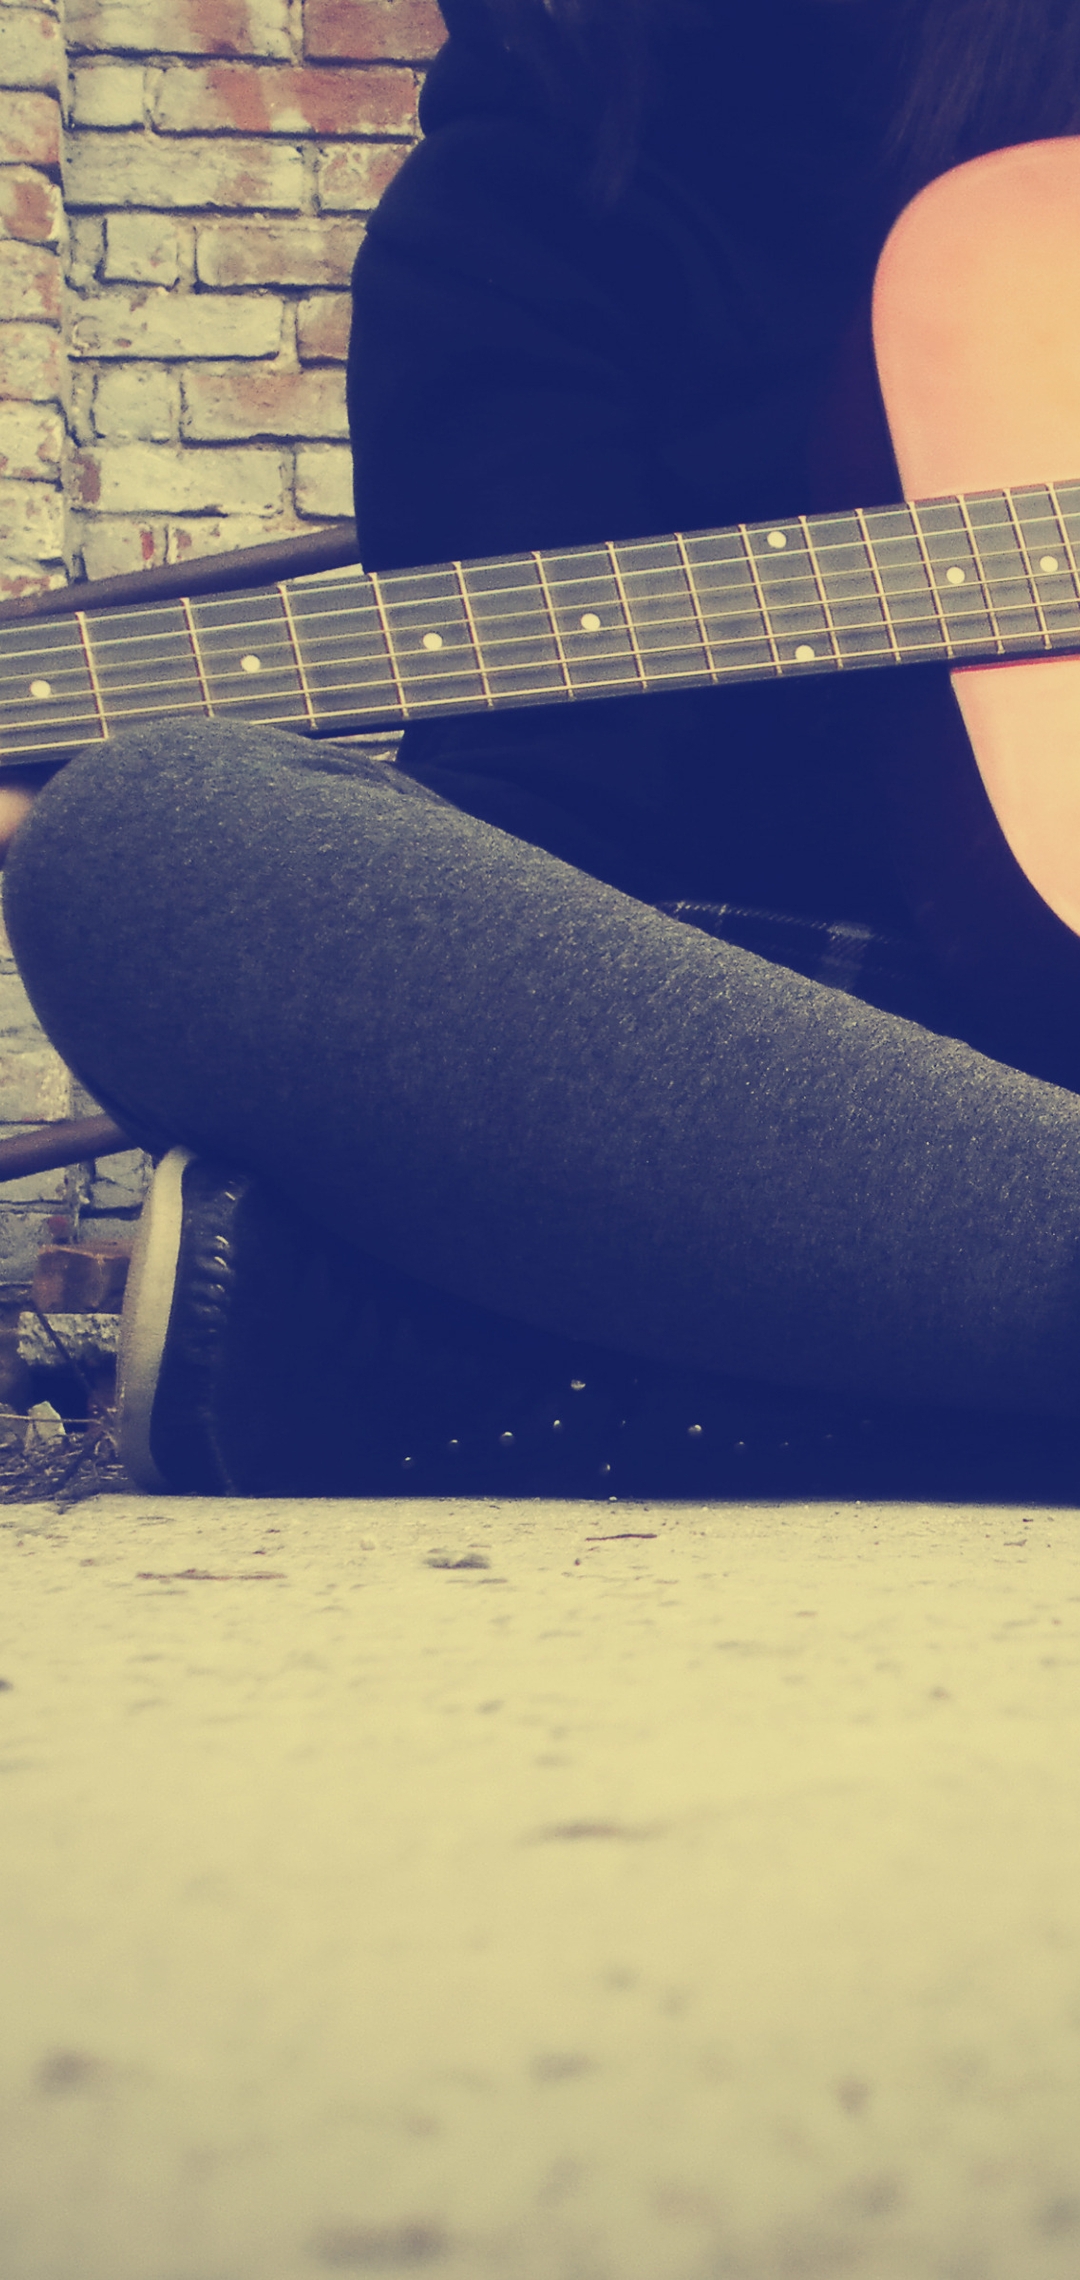 Image: Girl, sitting, guitar, strings, playing, brick wall